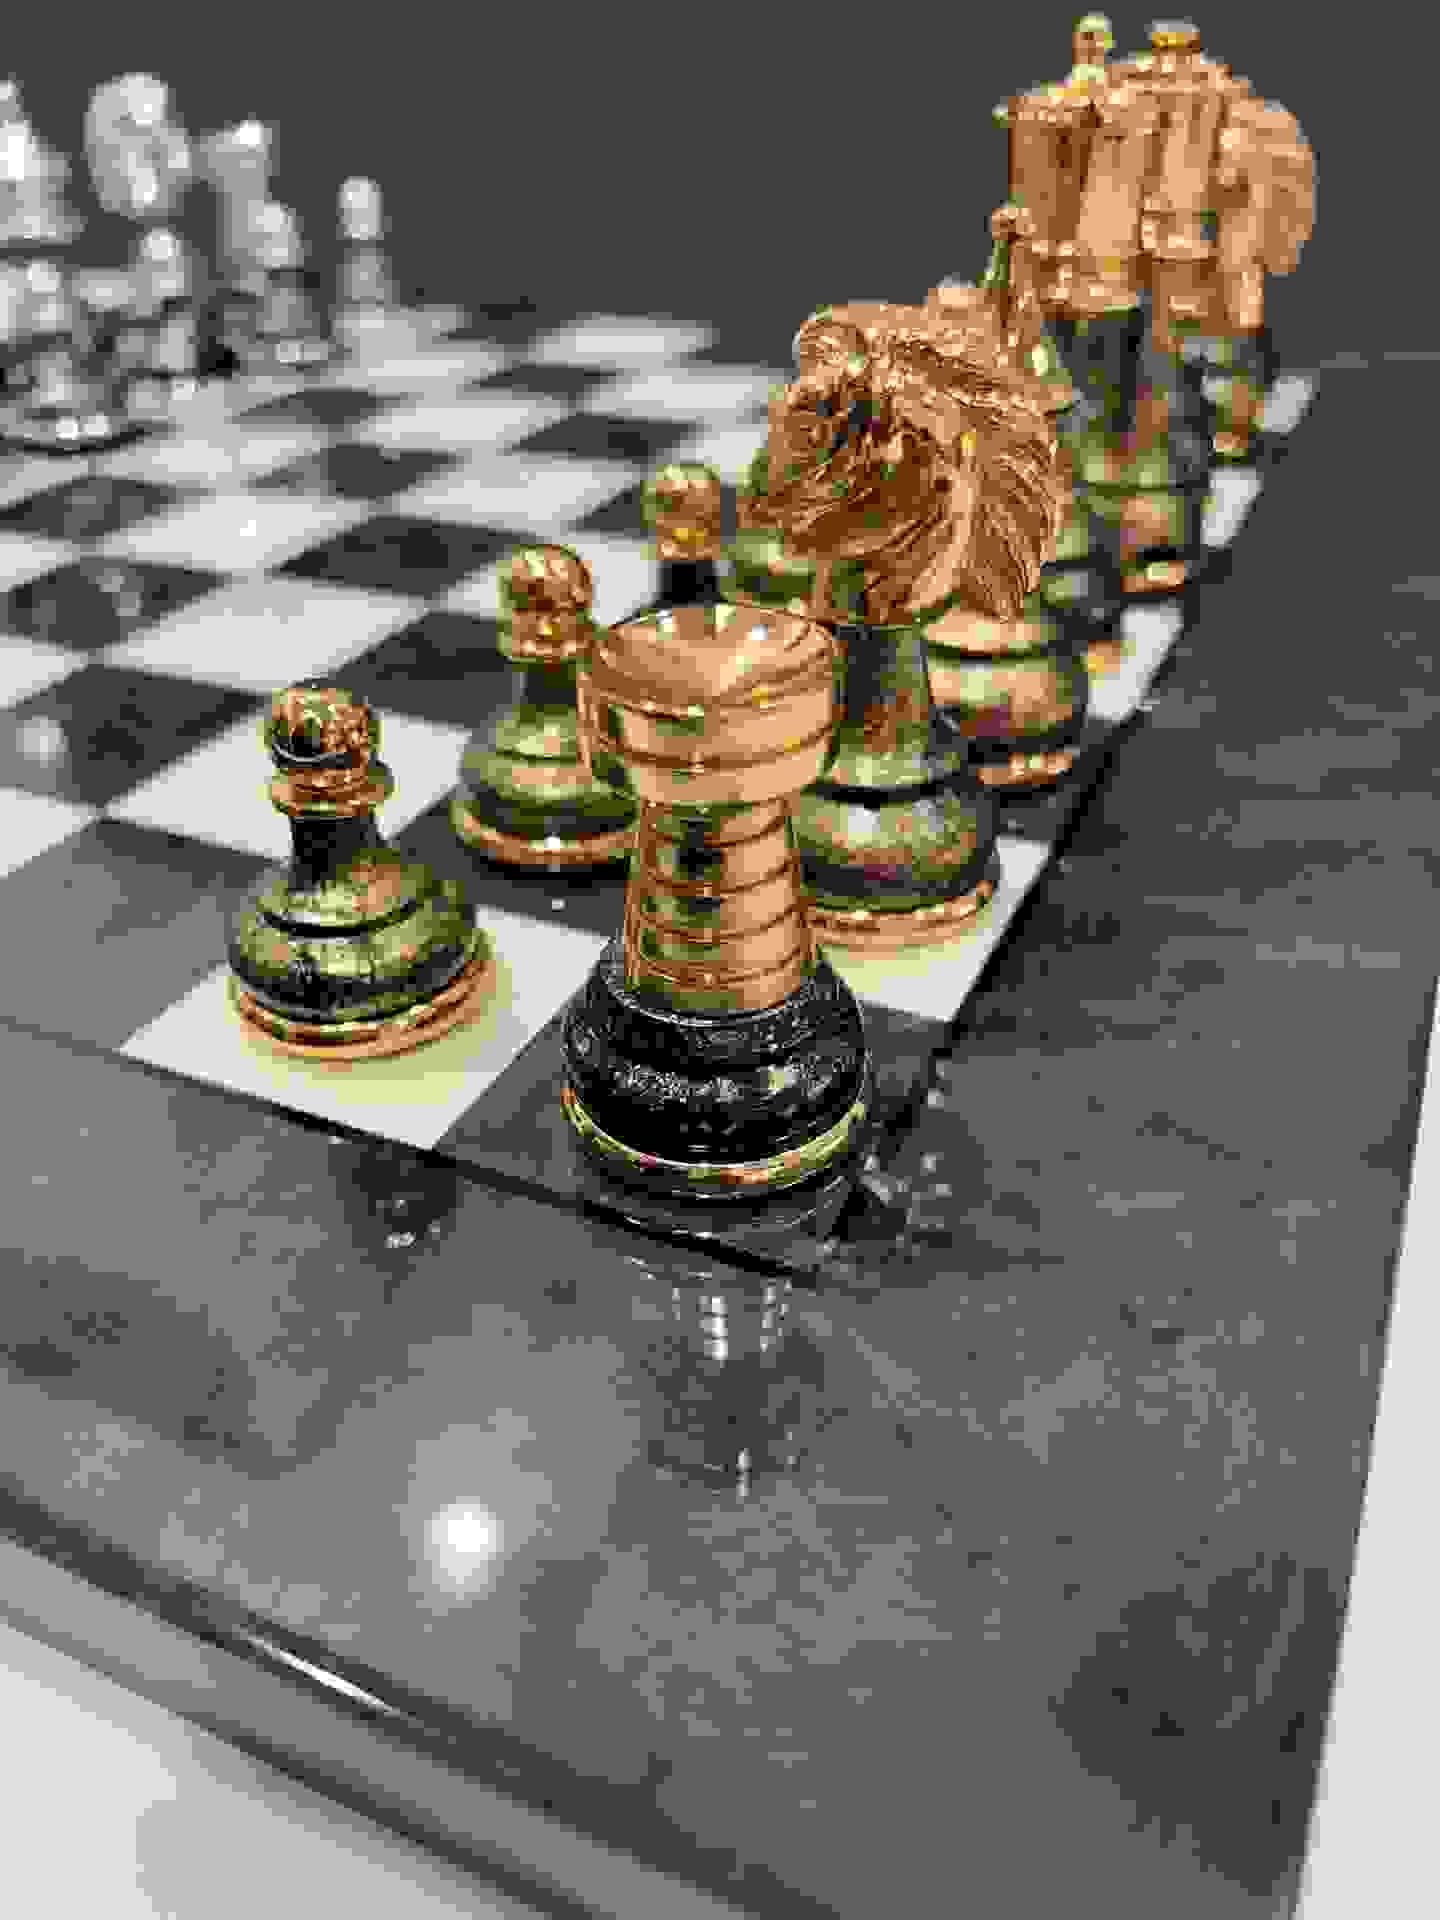 Italfama Chess Set Grey/White Briar Wood 513R + 150GSF